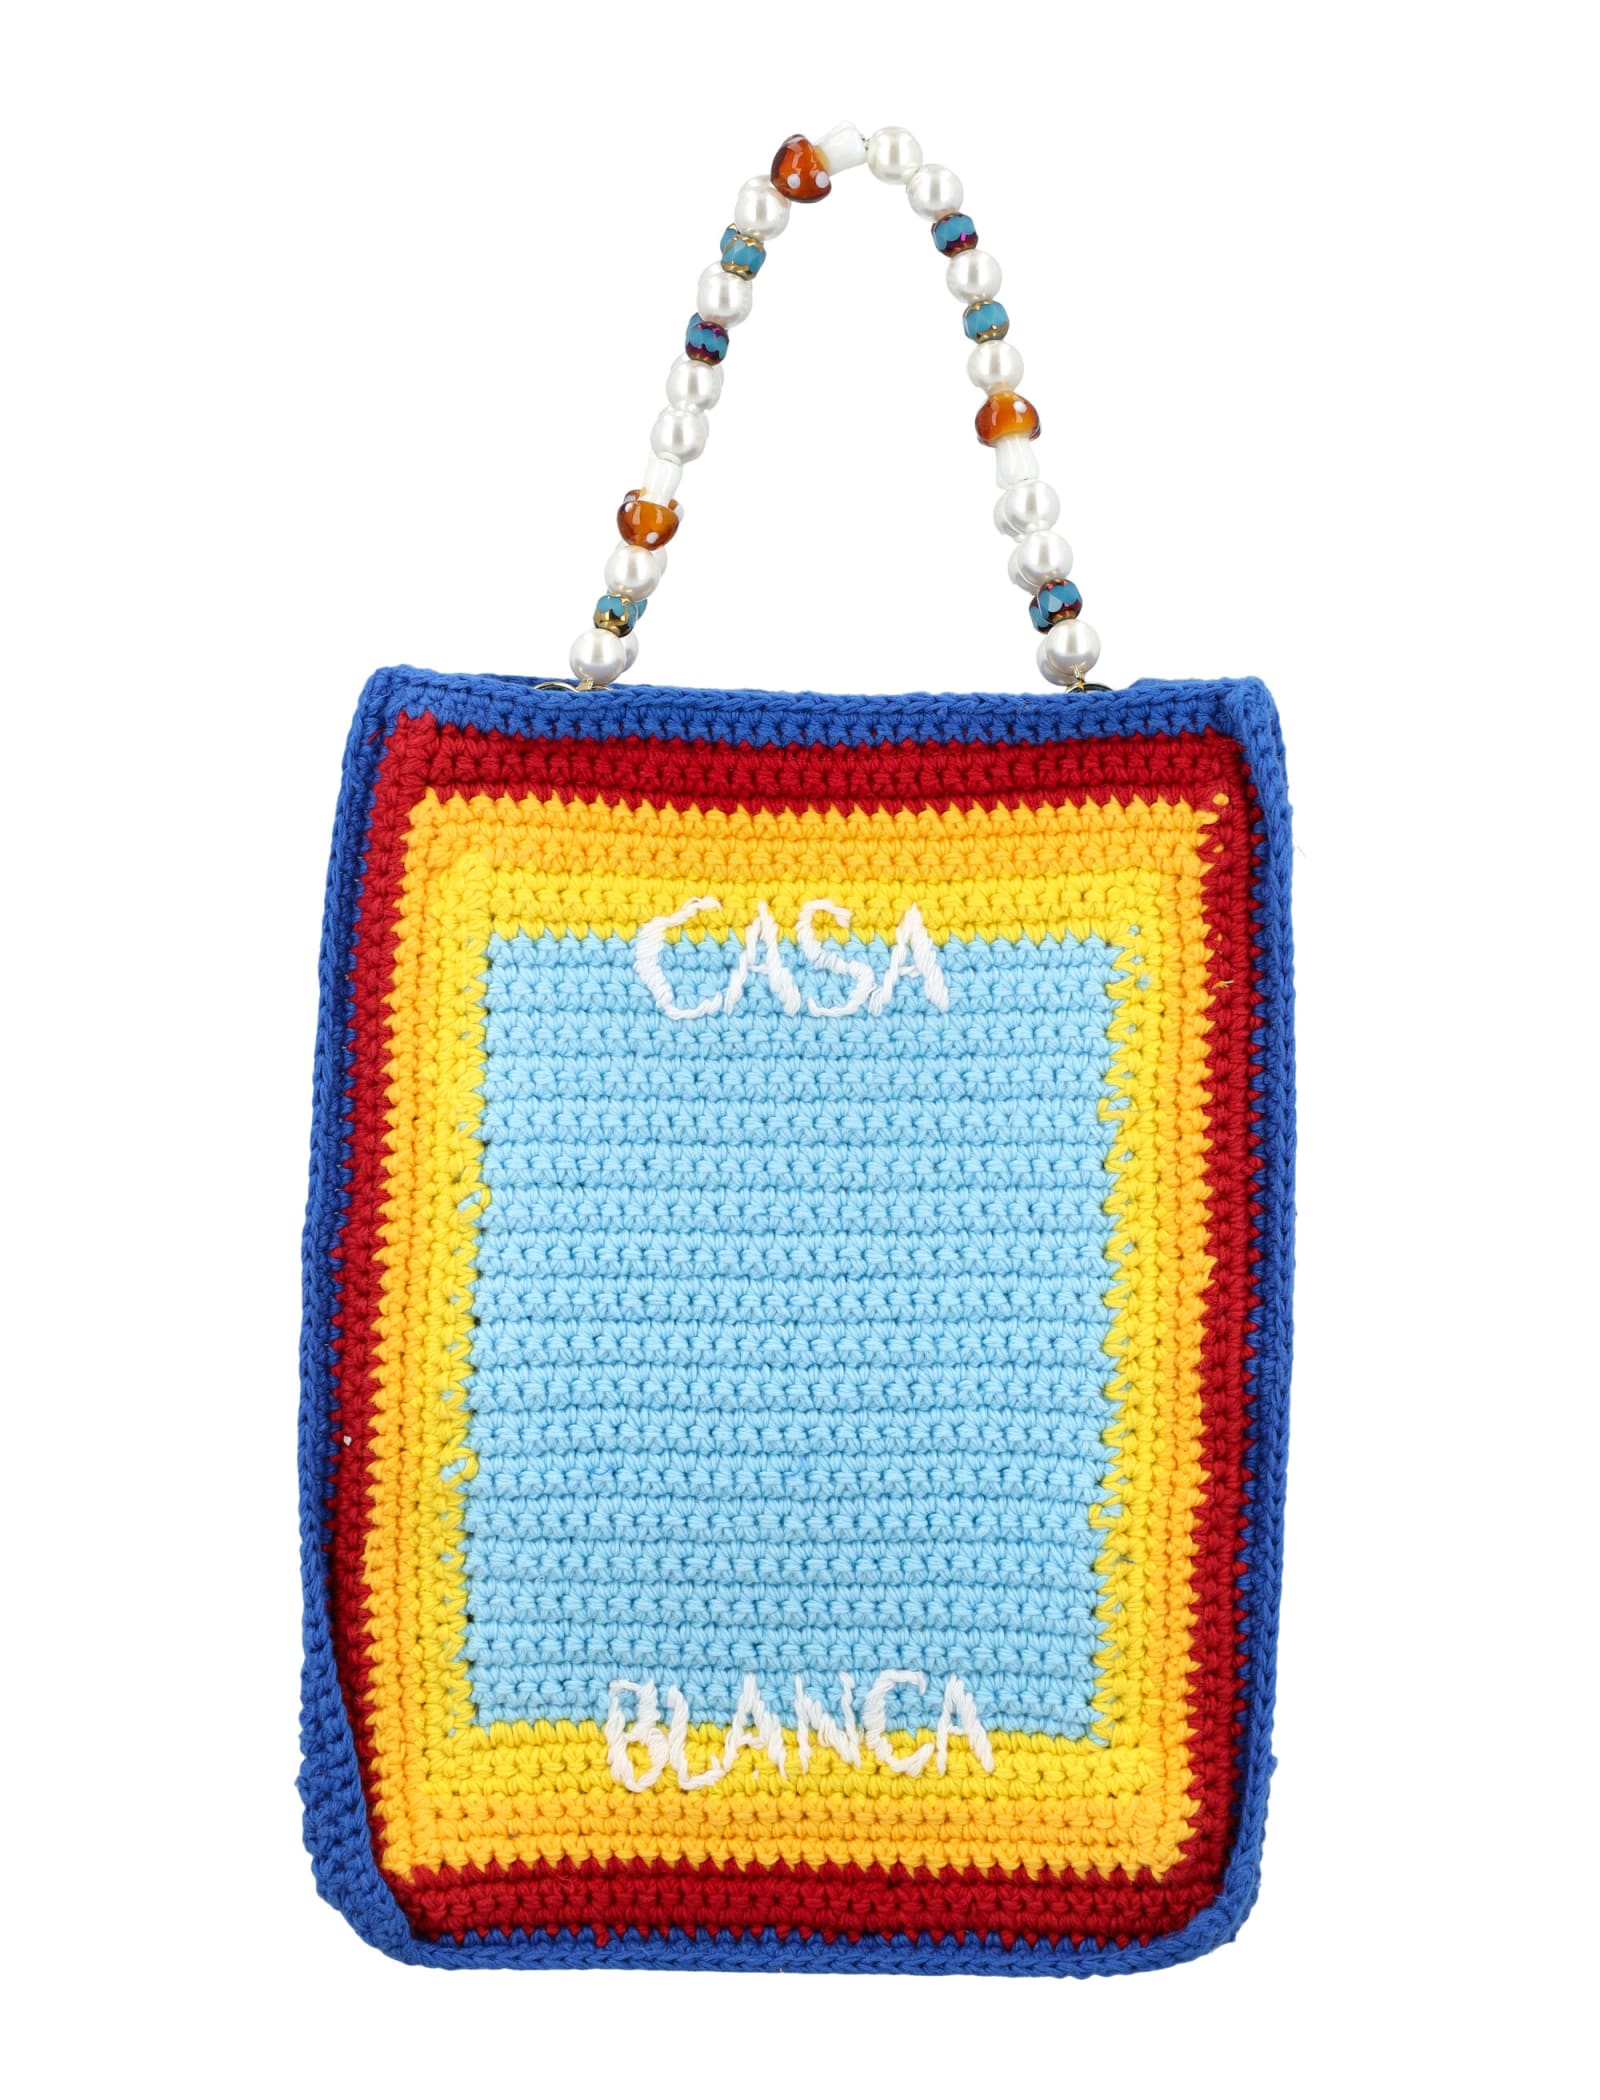 Casablanca Arch Beaded Crochet Bag